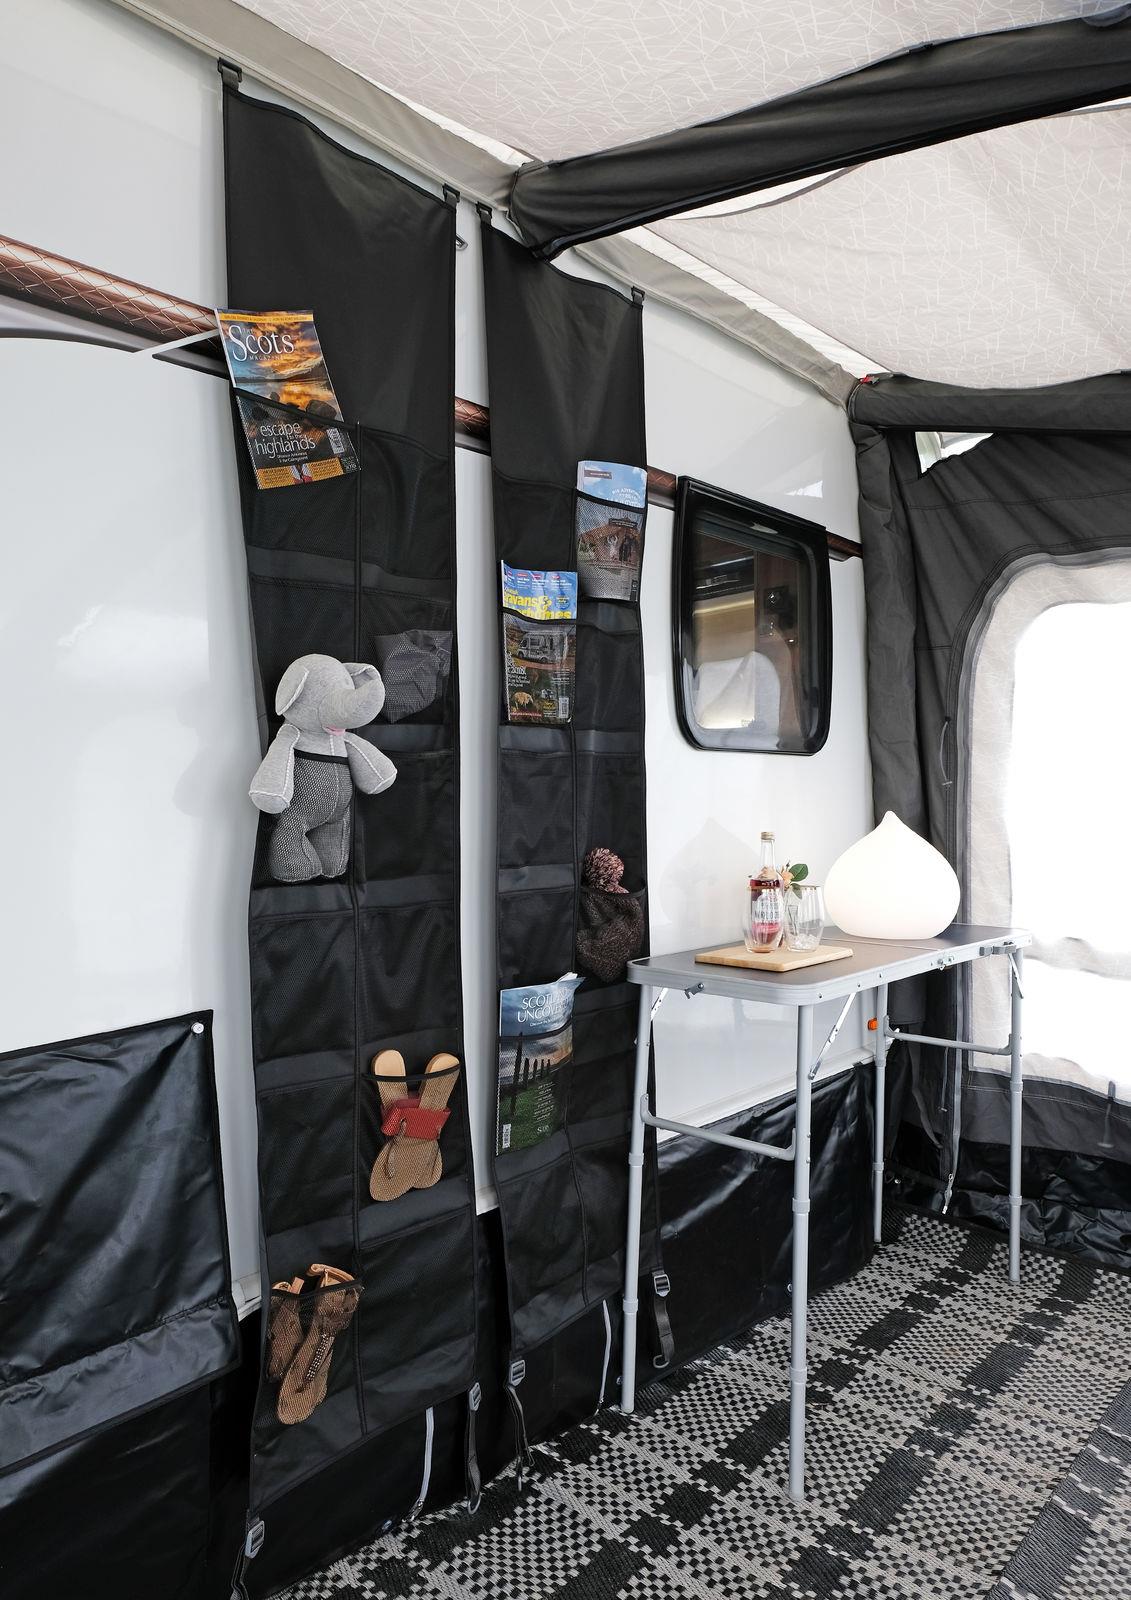 Vango Collapsible Tent Storage Organiser 